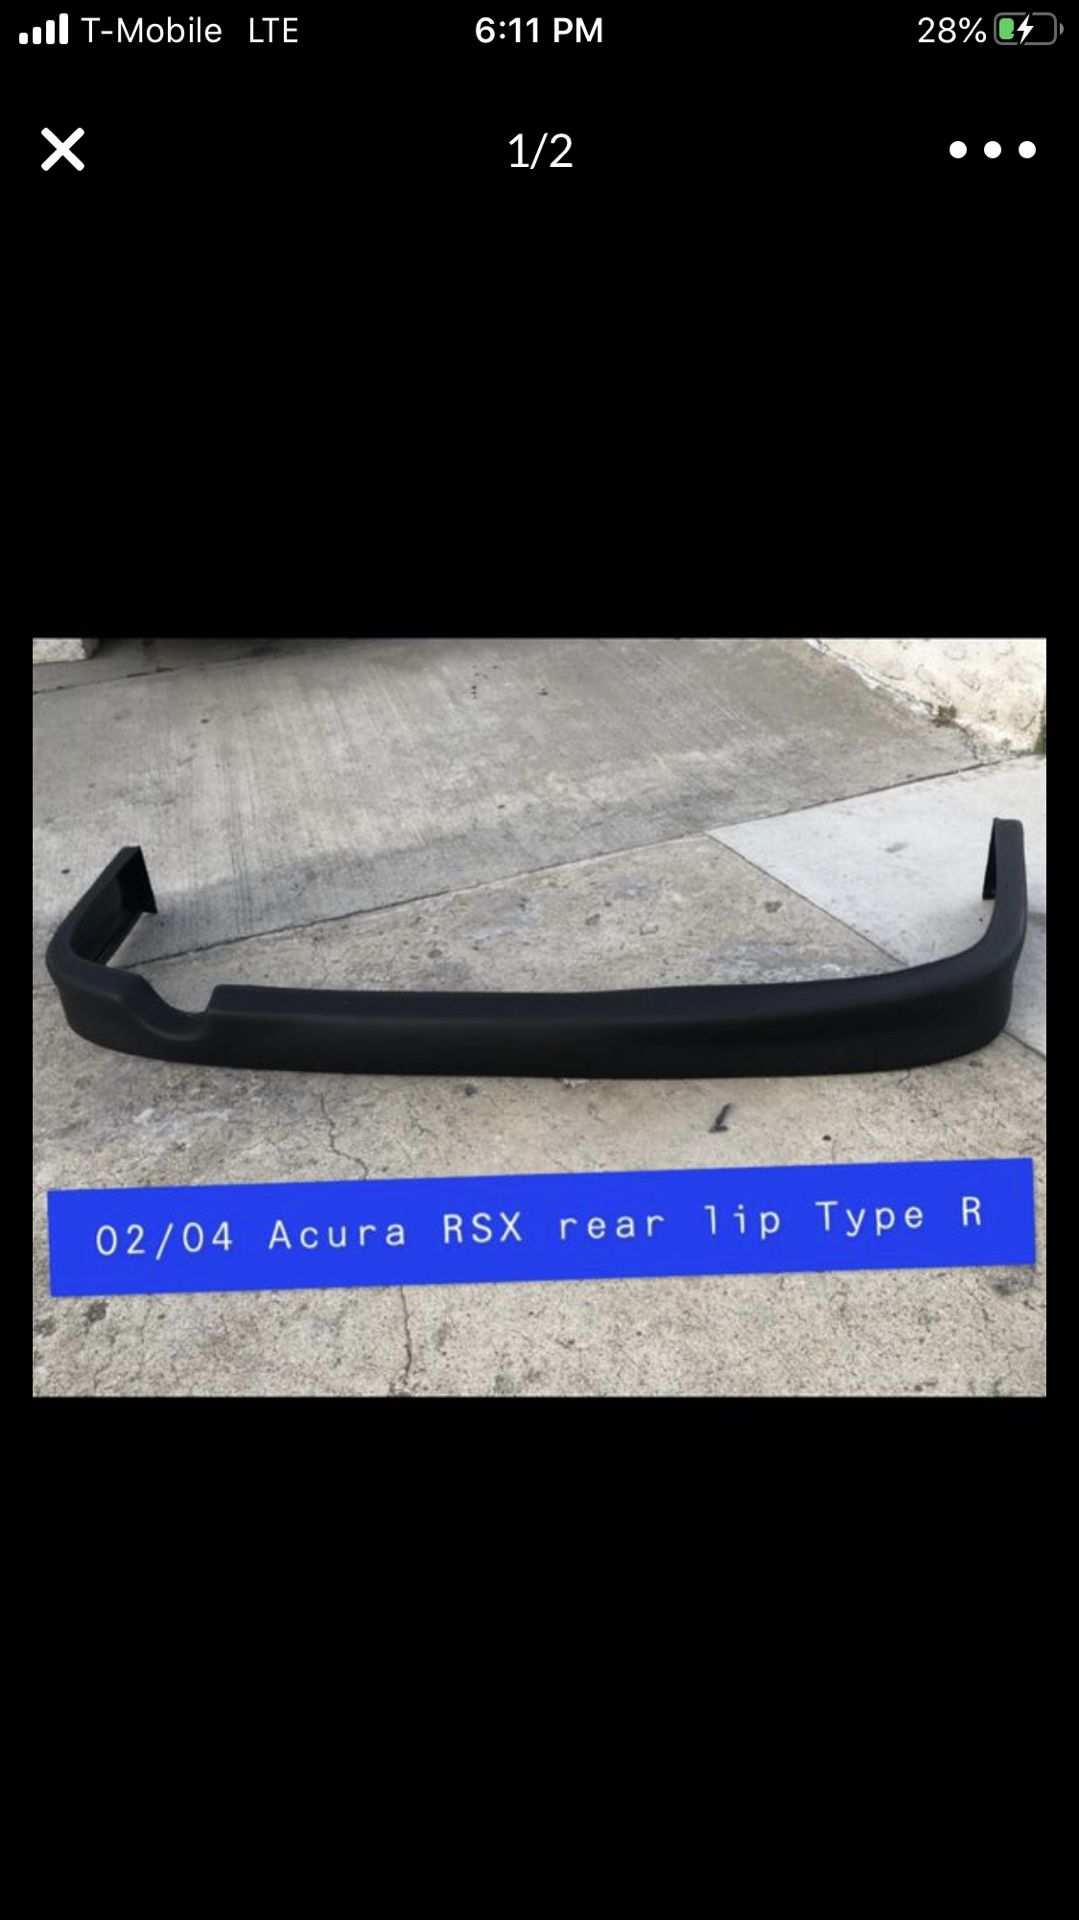 New 02-04 Acura RSX rear lip type R